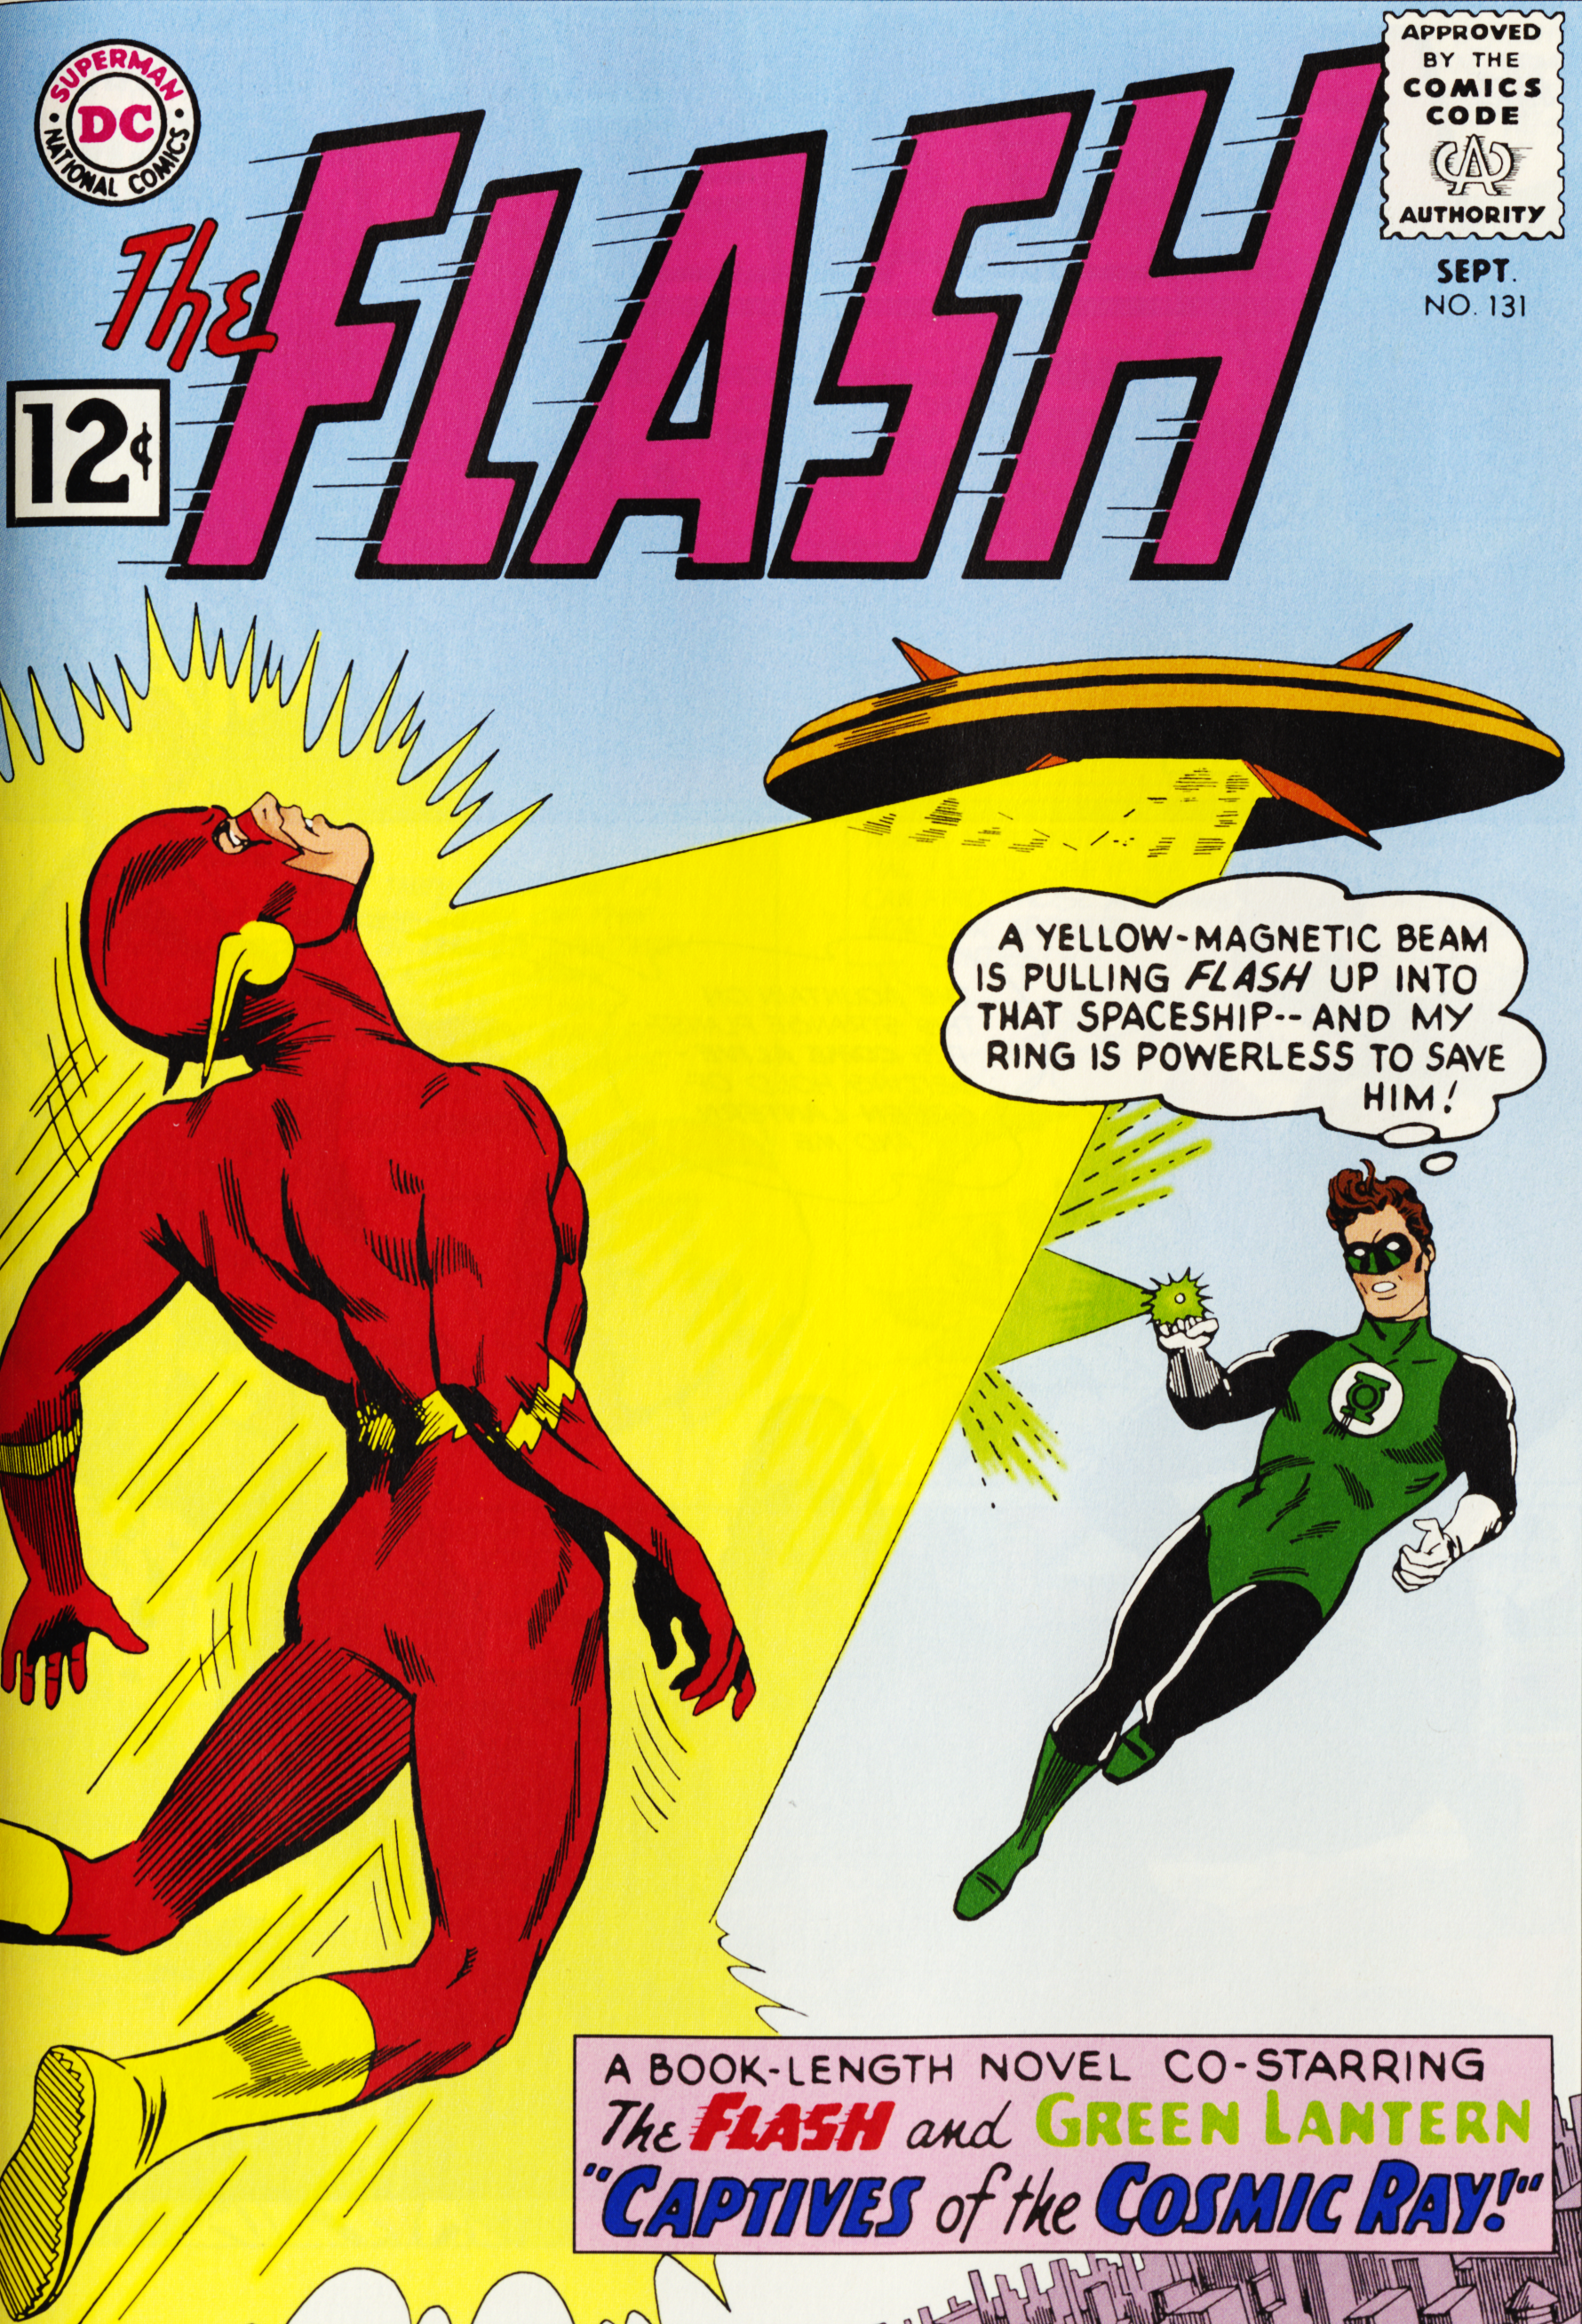 The Flash no131